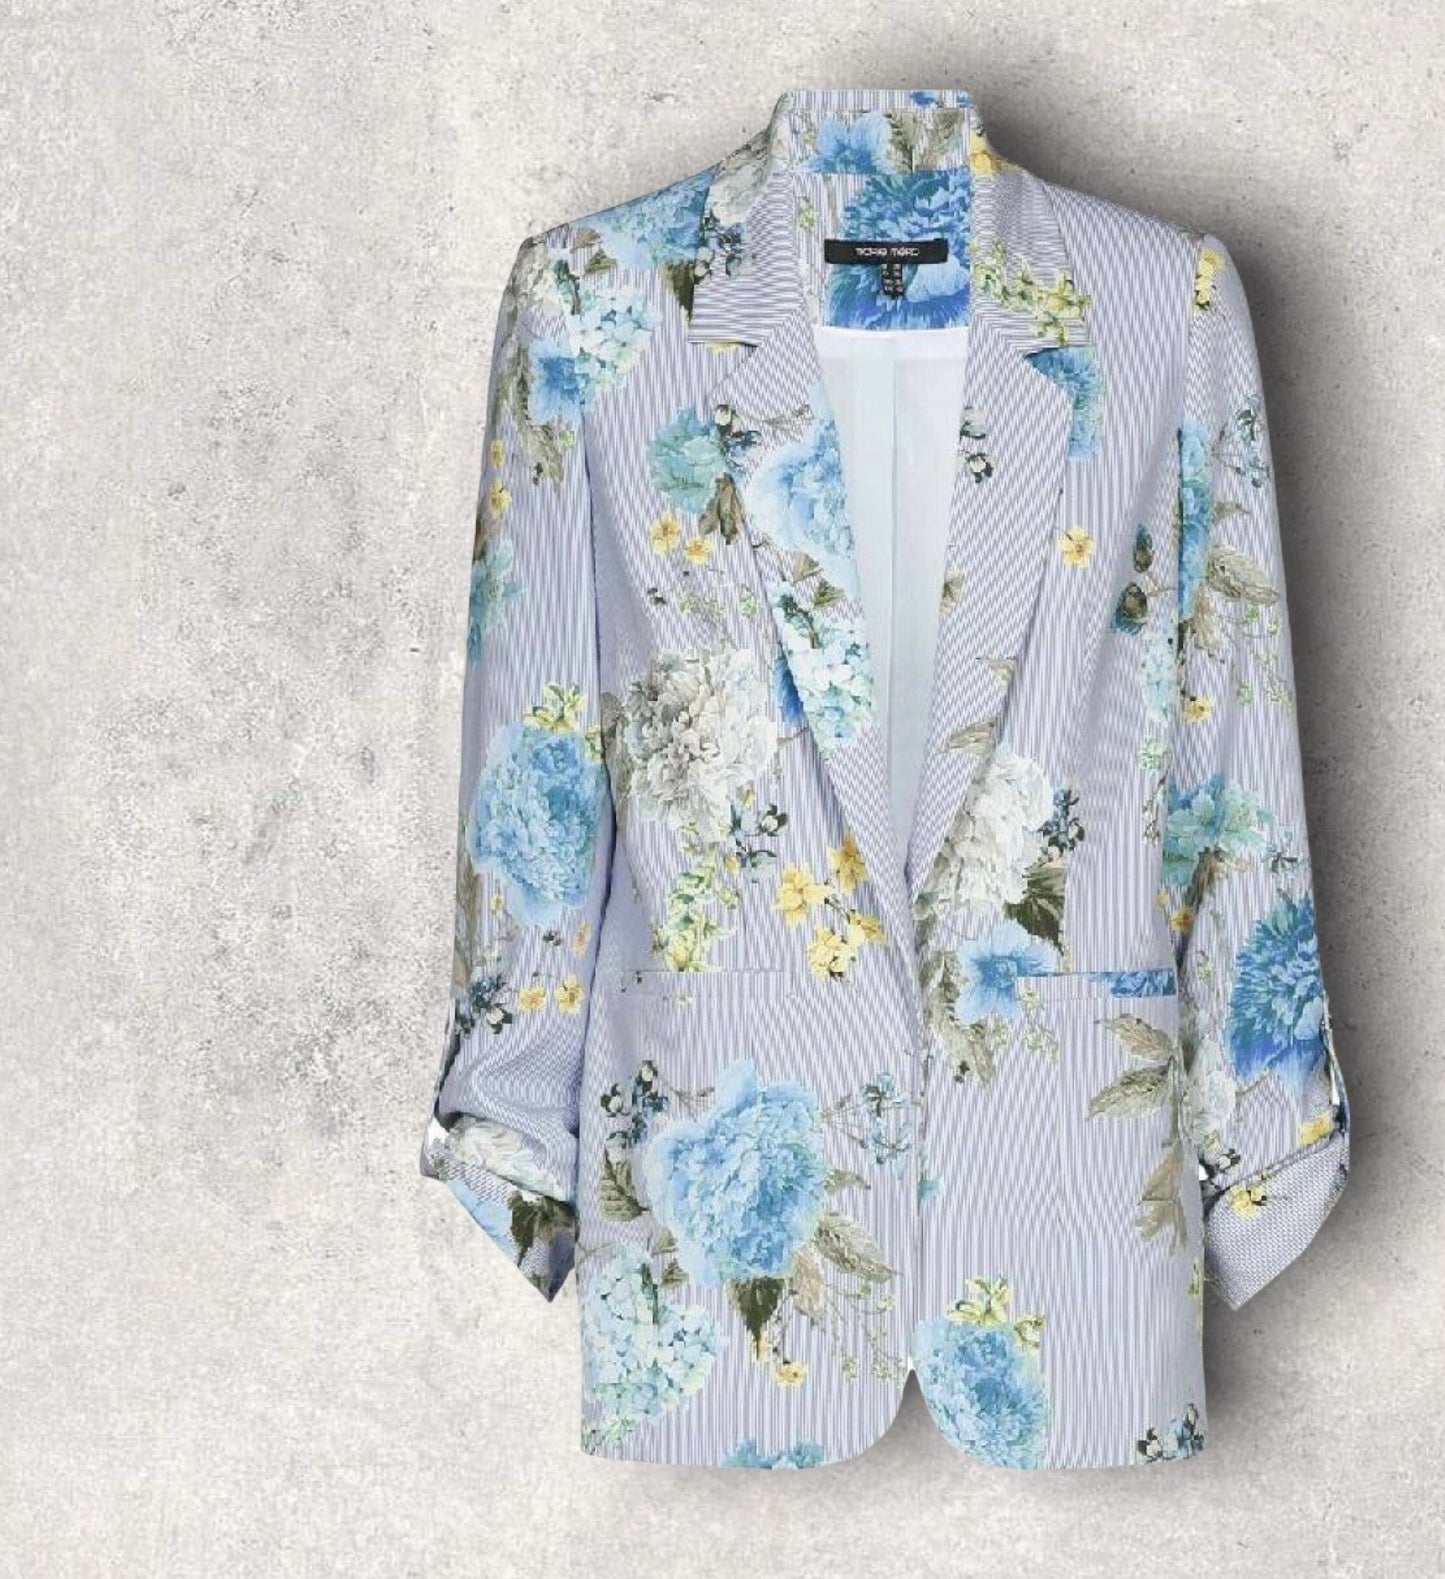 Marie Mero Blue Floral Illusion Jacket Blazer UK 10 US 6 IT 42 BNWT RRP £205.00 Timeless Fashions